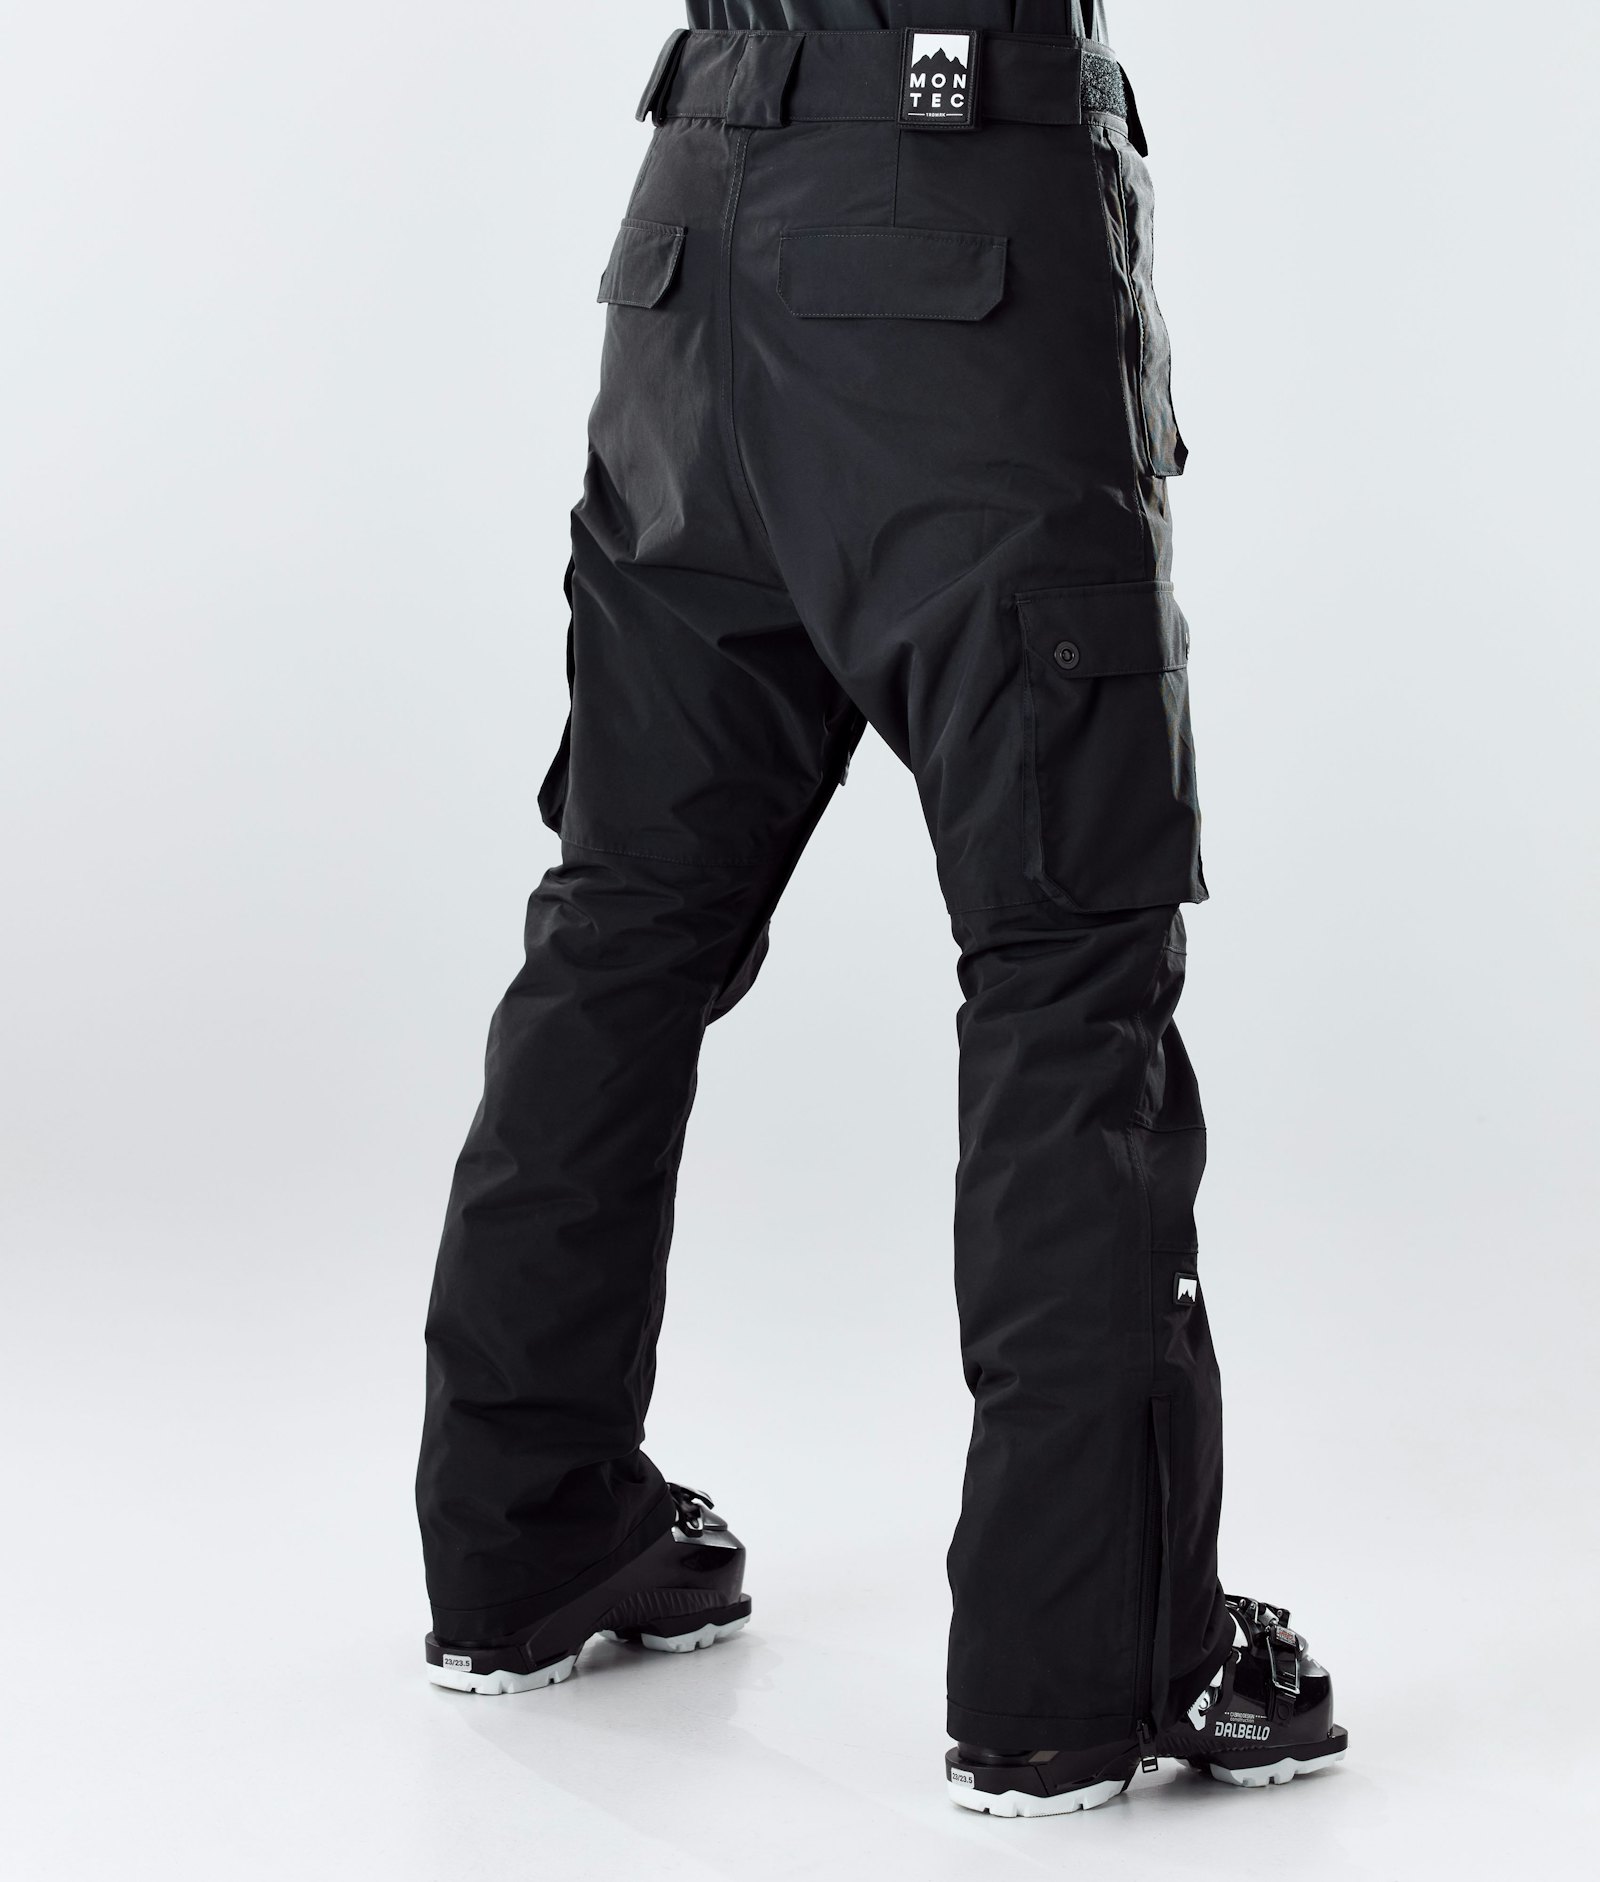 Doom W 2020 Pantalon de Ski Femme Black